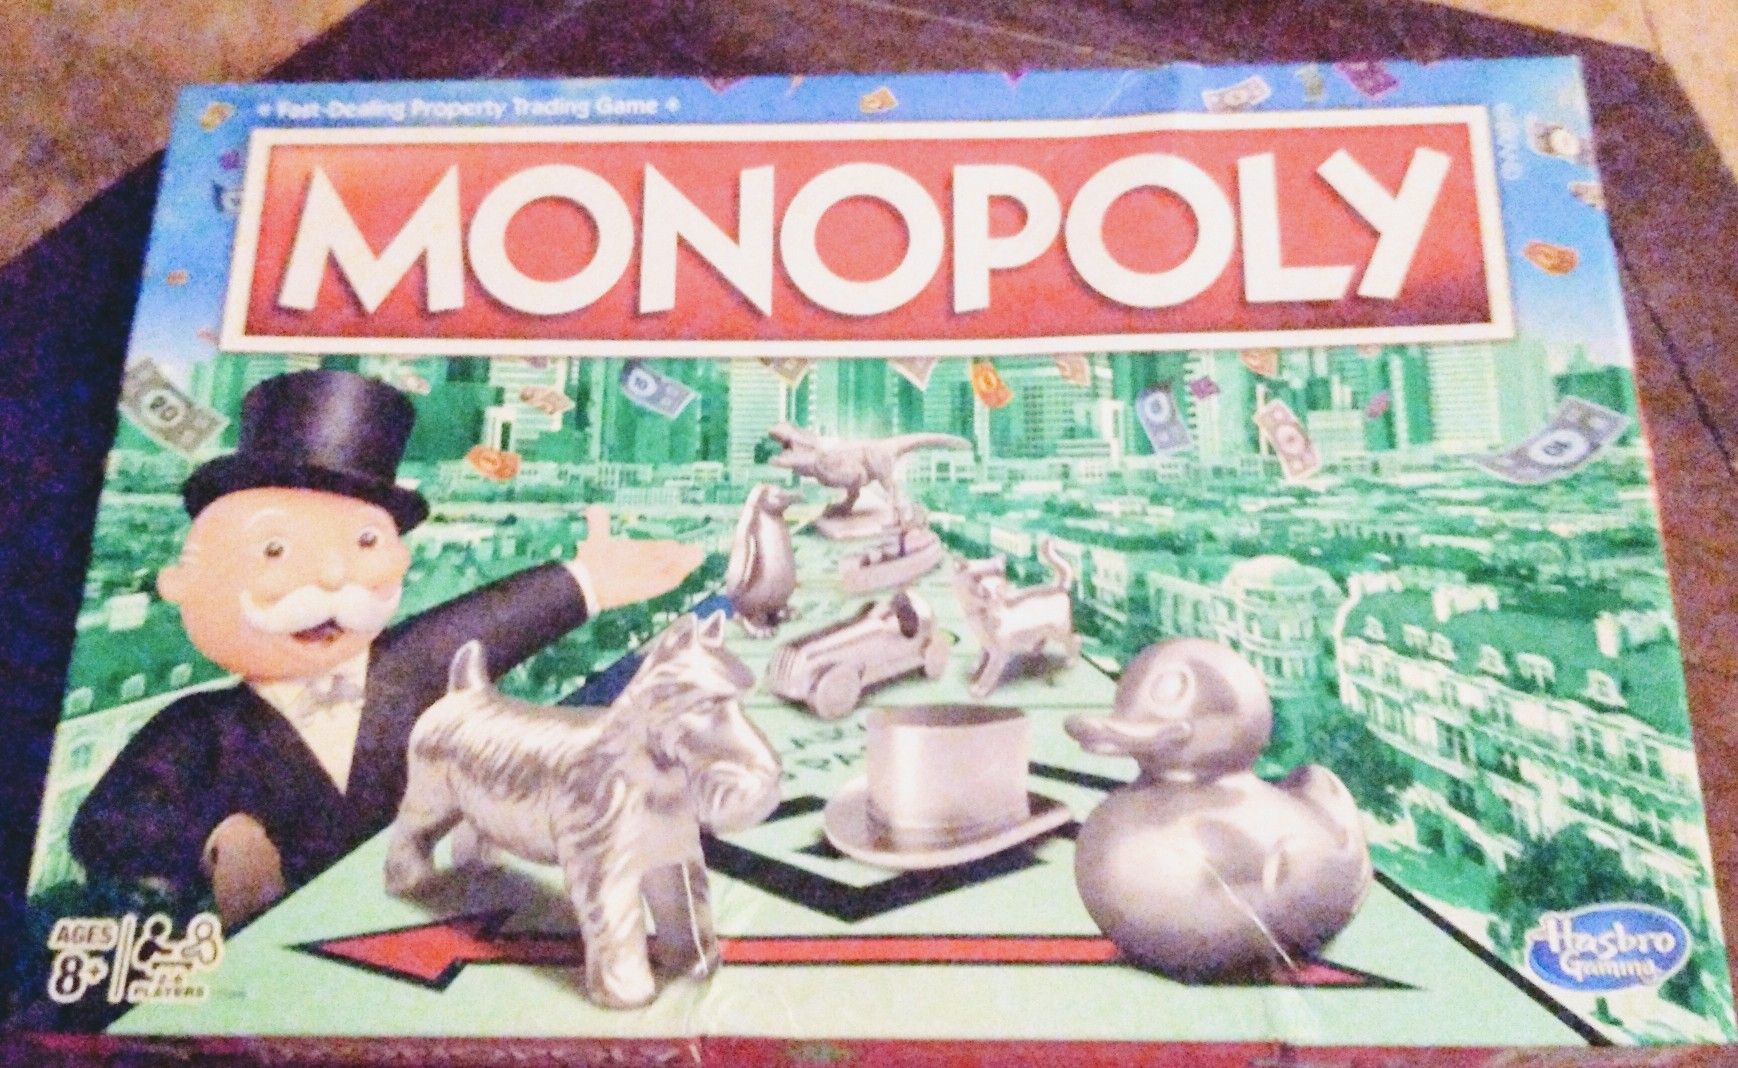 Original Monopoly Game.